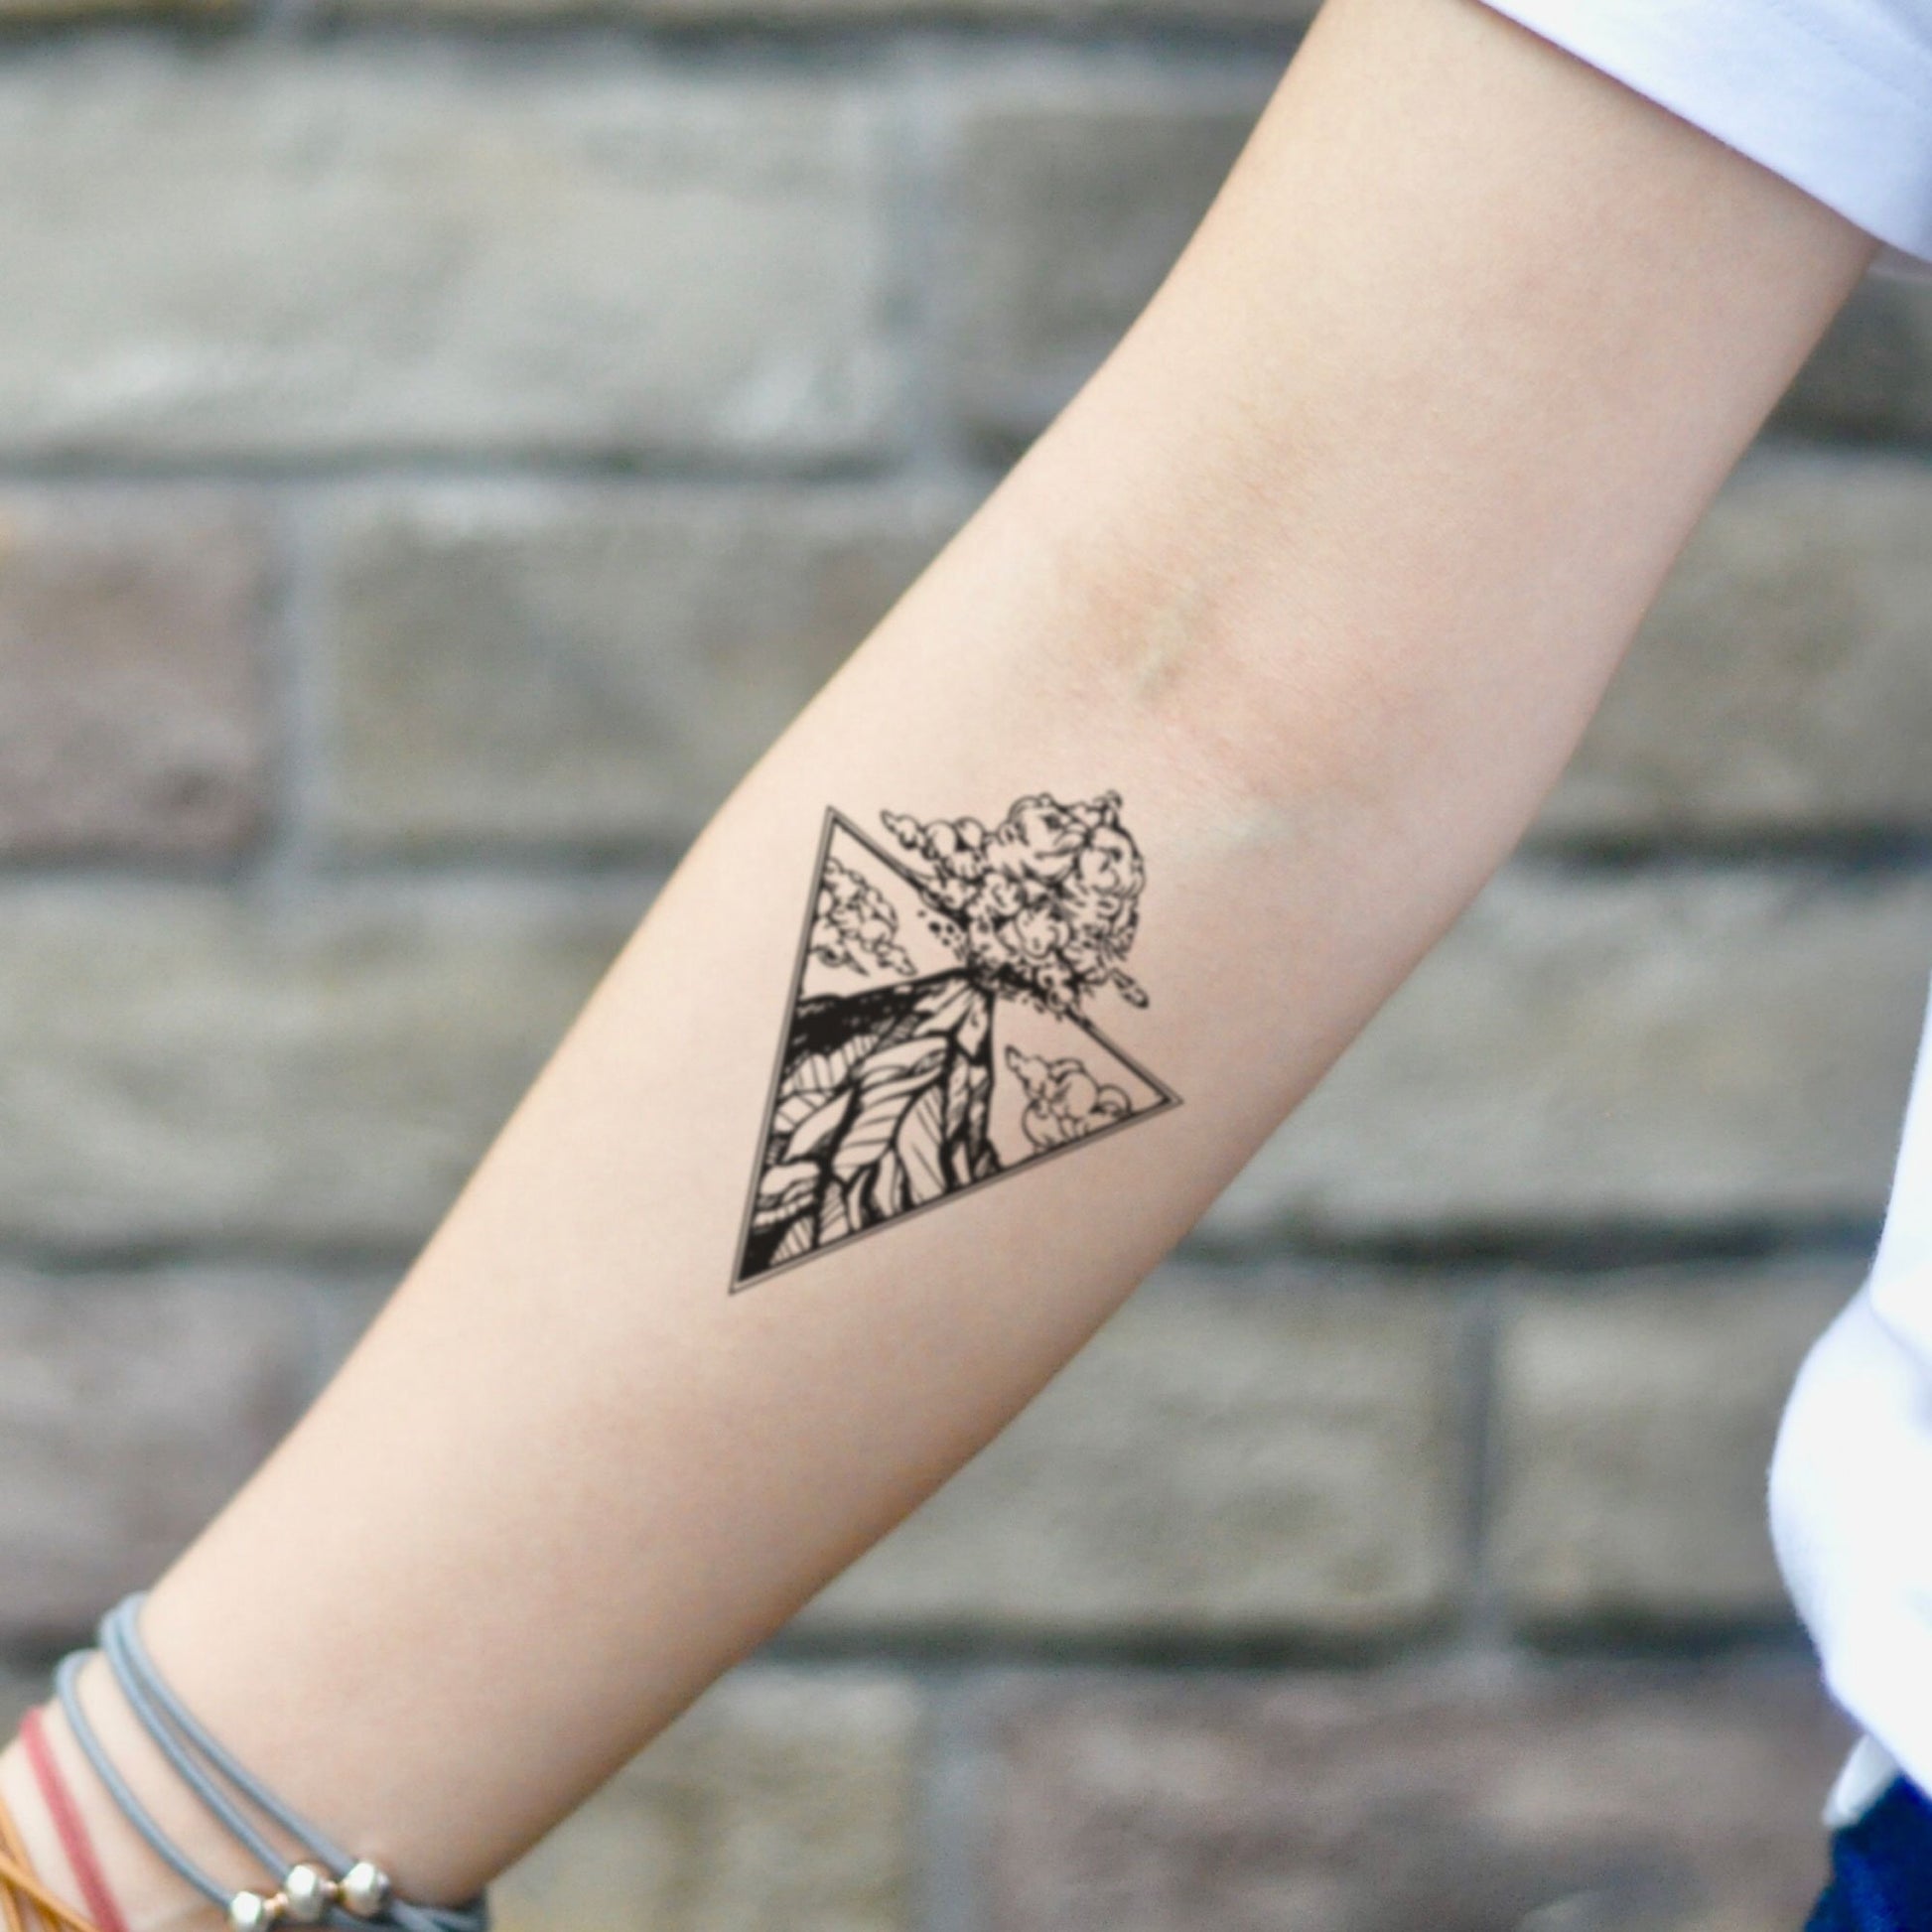 fake small volcano volcanic explosive nature triangle scene temporary tattoo sticker design idea on inner arm